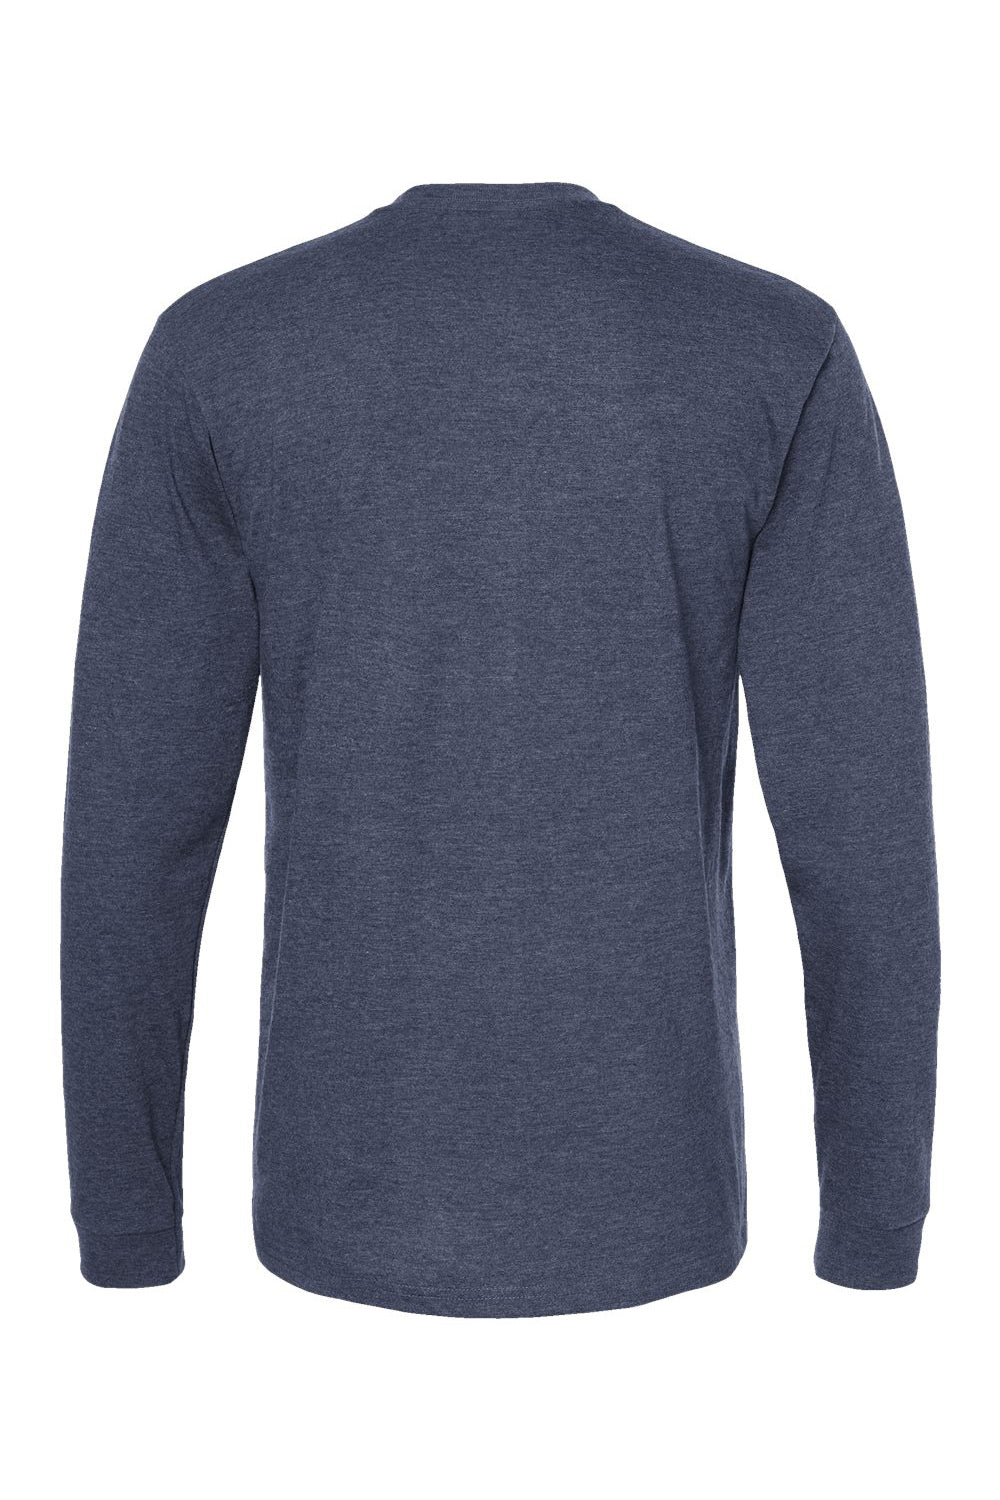 Tultex 291 Mens Jersey Long Sleeve Crewneck T-Shirt Heather Denim Blue Flat Back